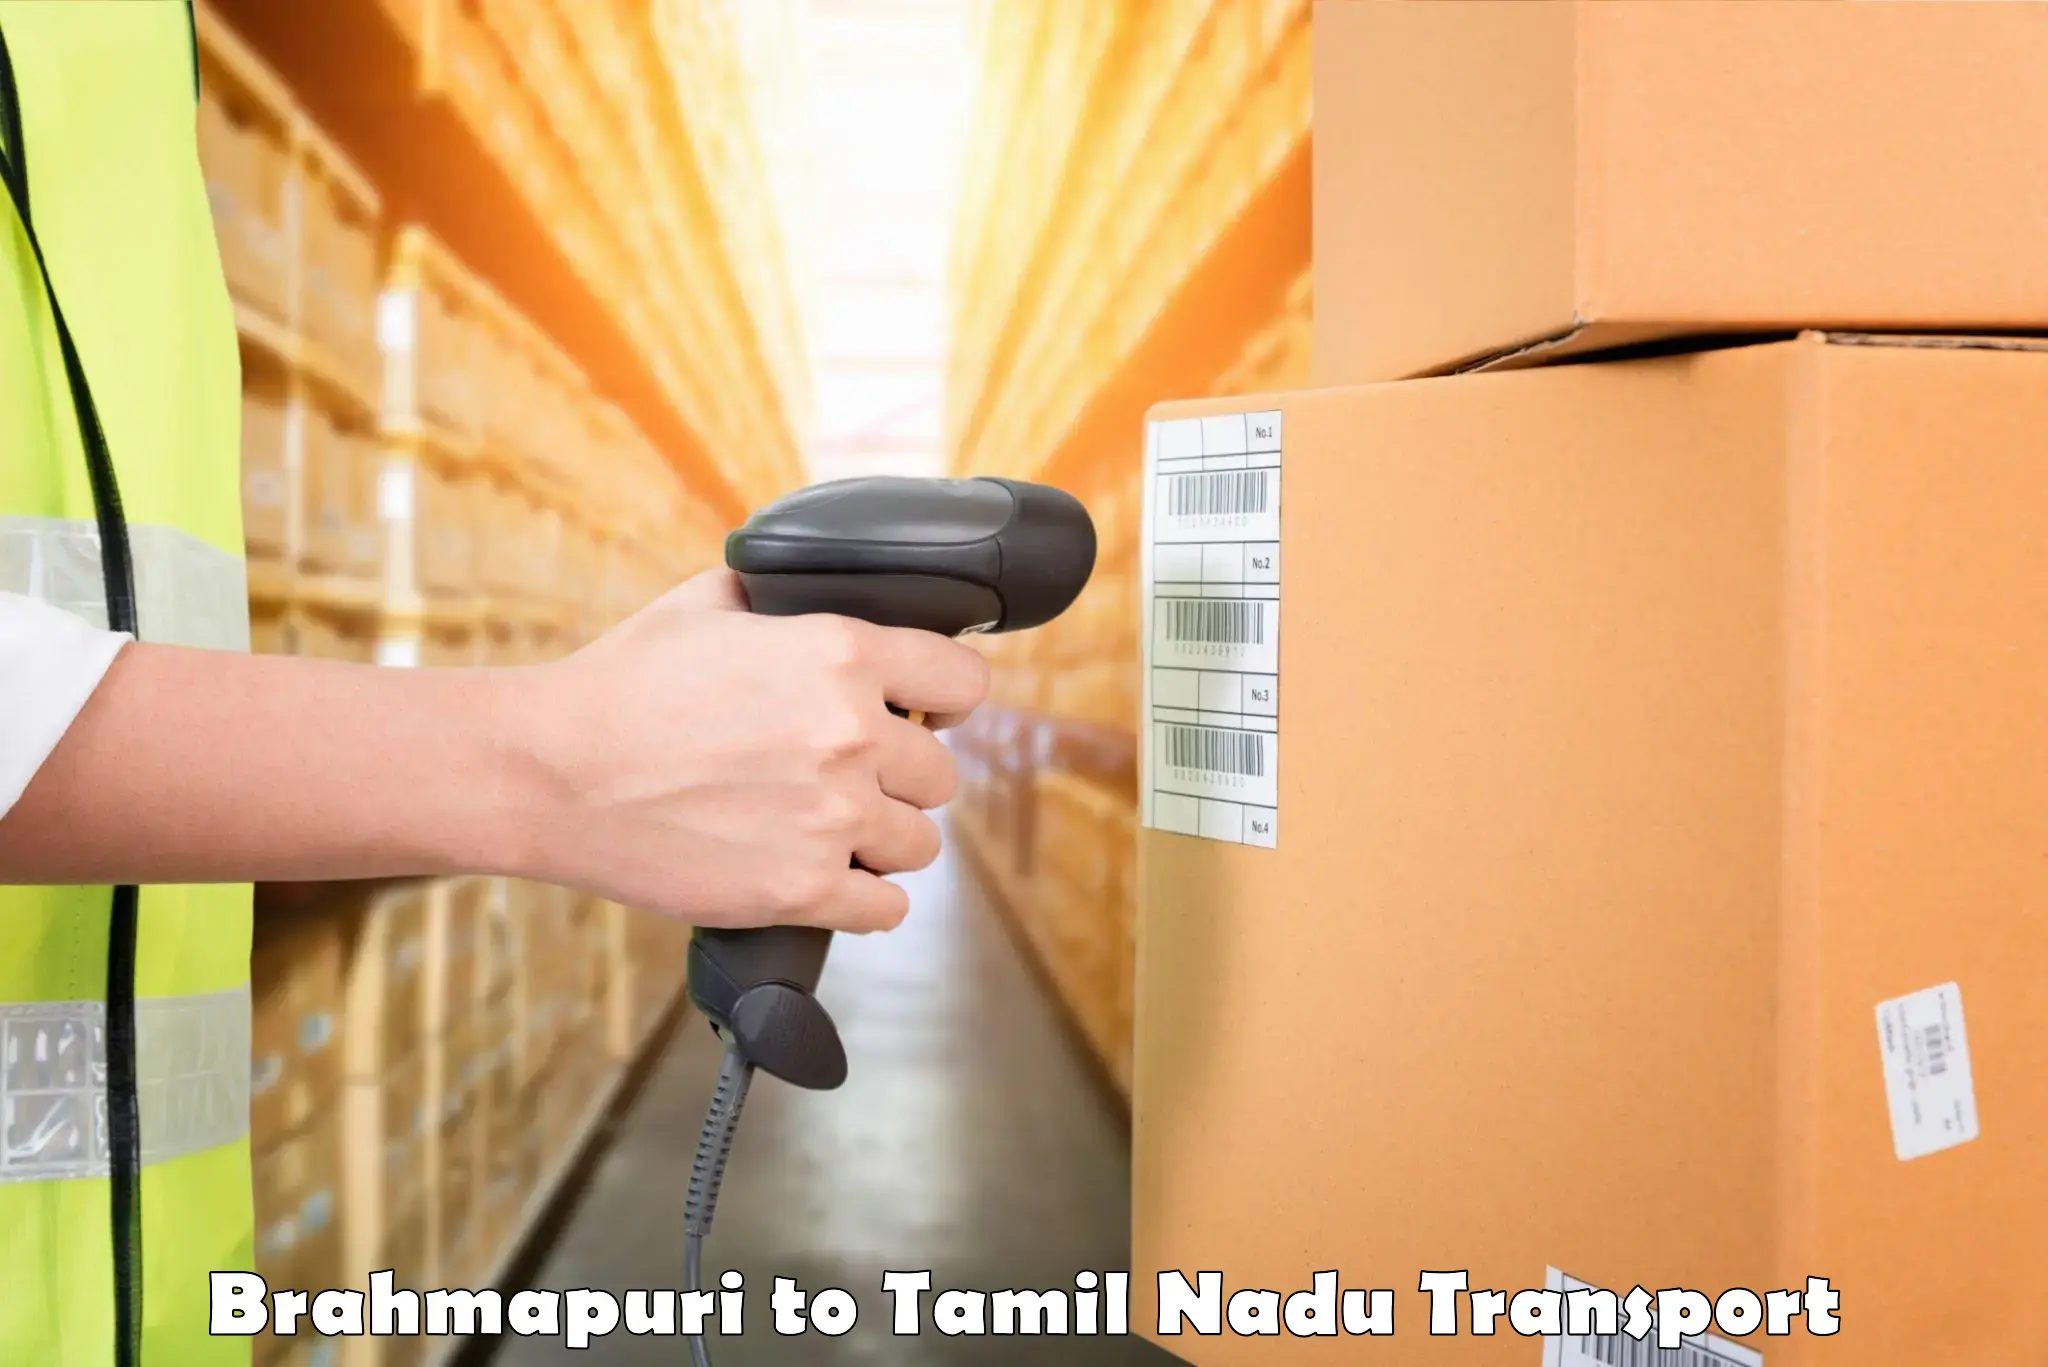 Truck transport companies in India Brahmapuri to Tamil Nadu